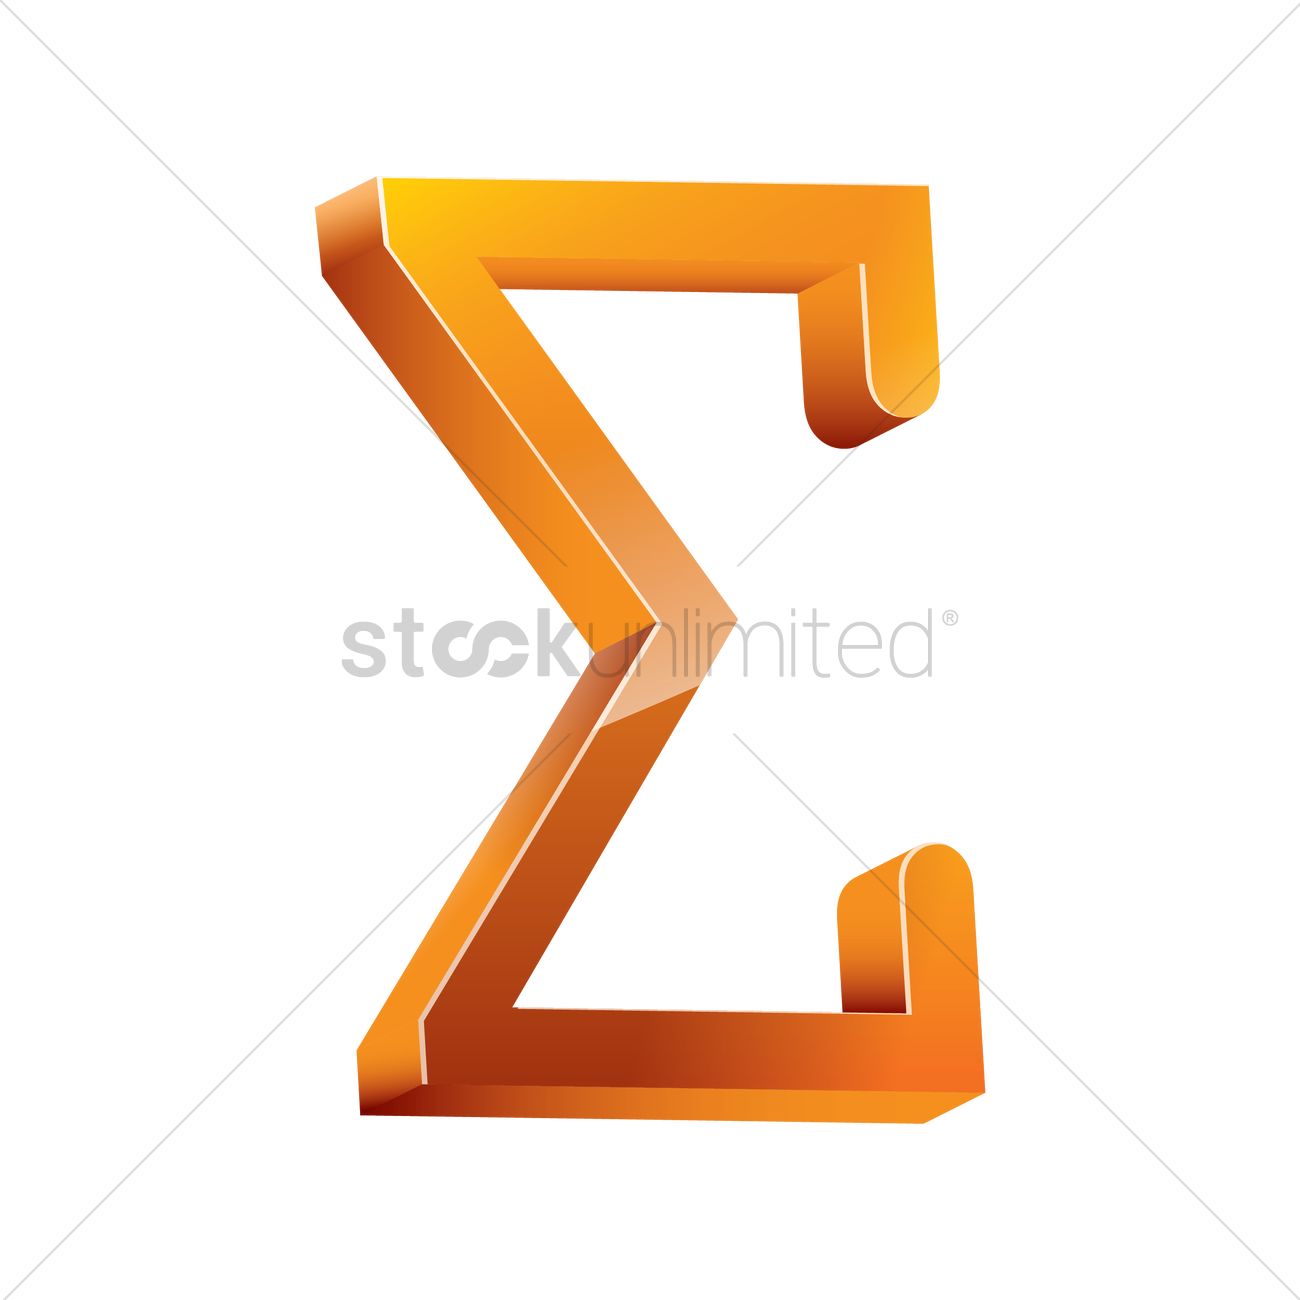 3d sigma symbol Vector Image - 1827855 | StockUnlimited